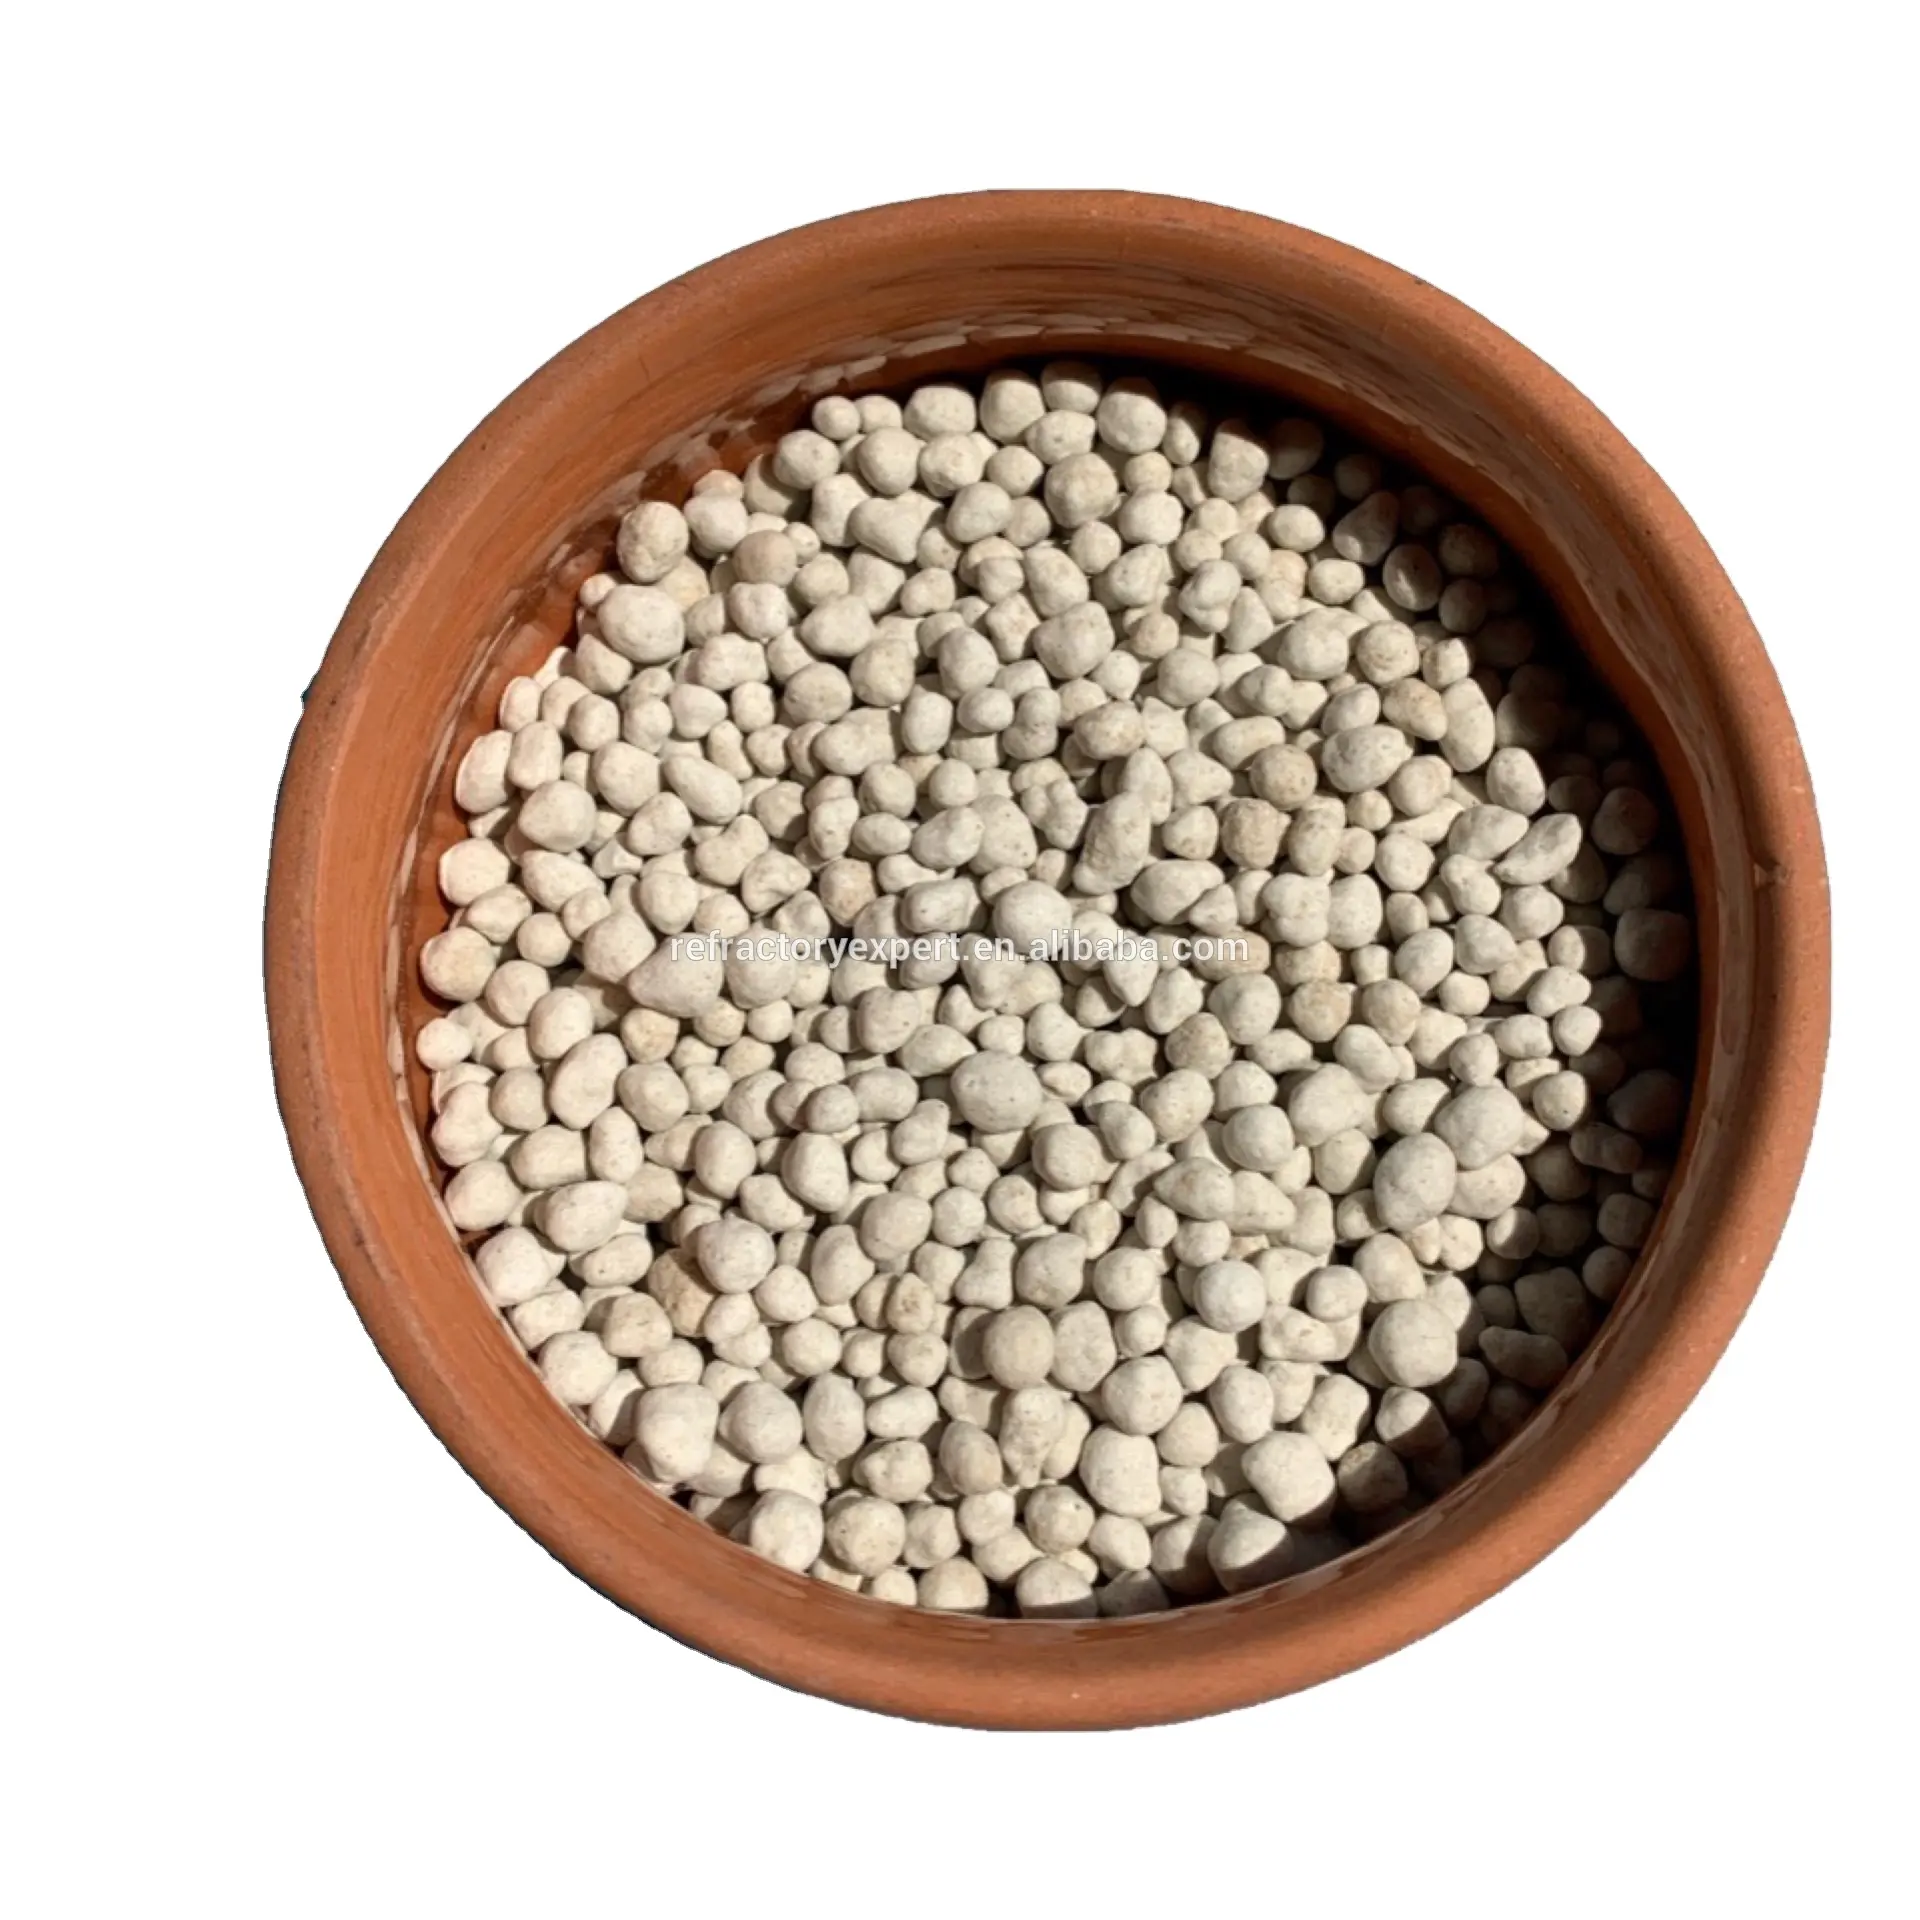 Silicon Calcium Magnesium white granular chemical fertilizer for vegetable /fruits crops